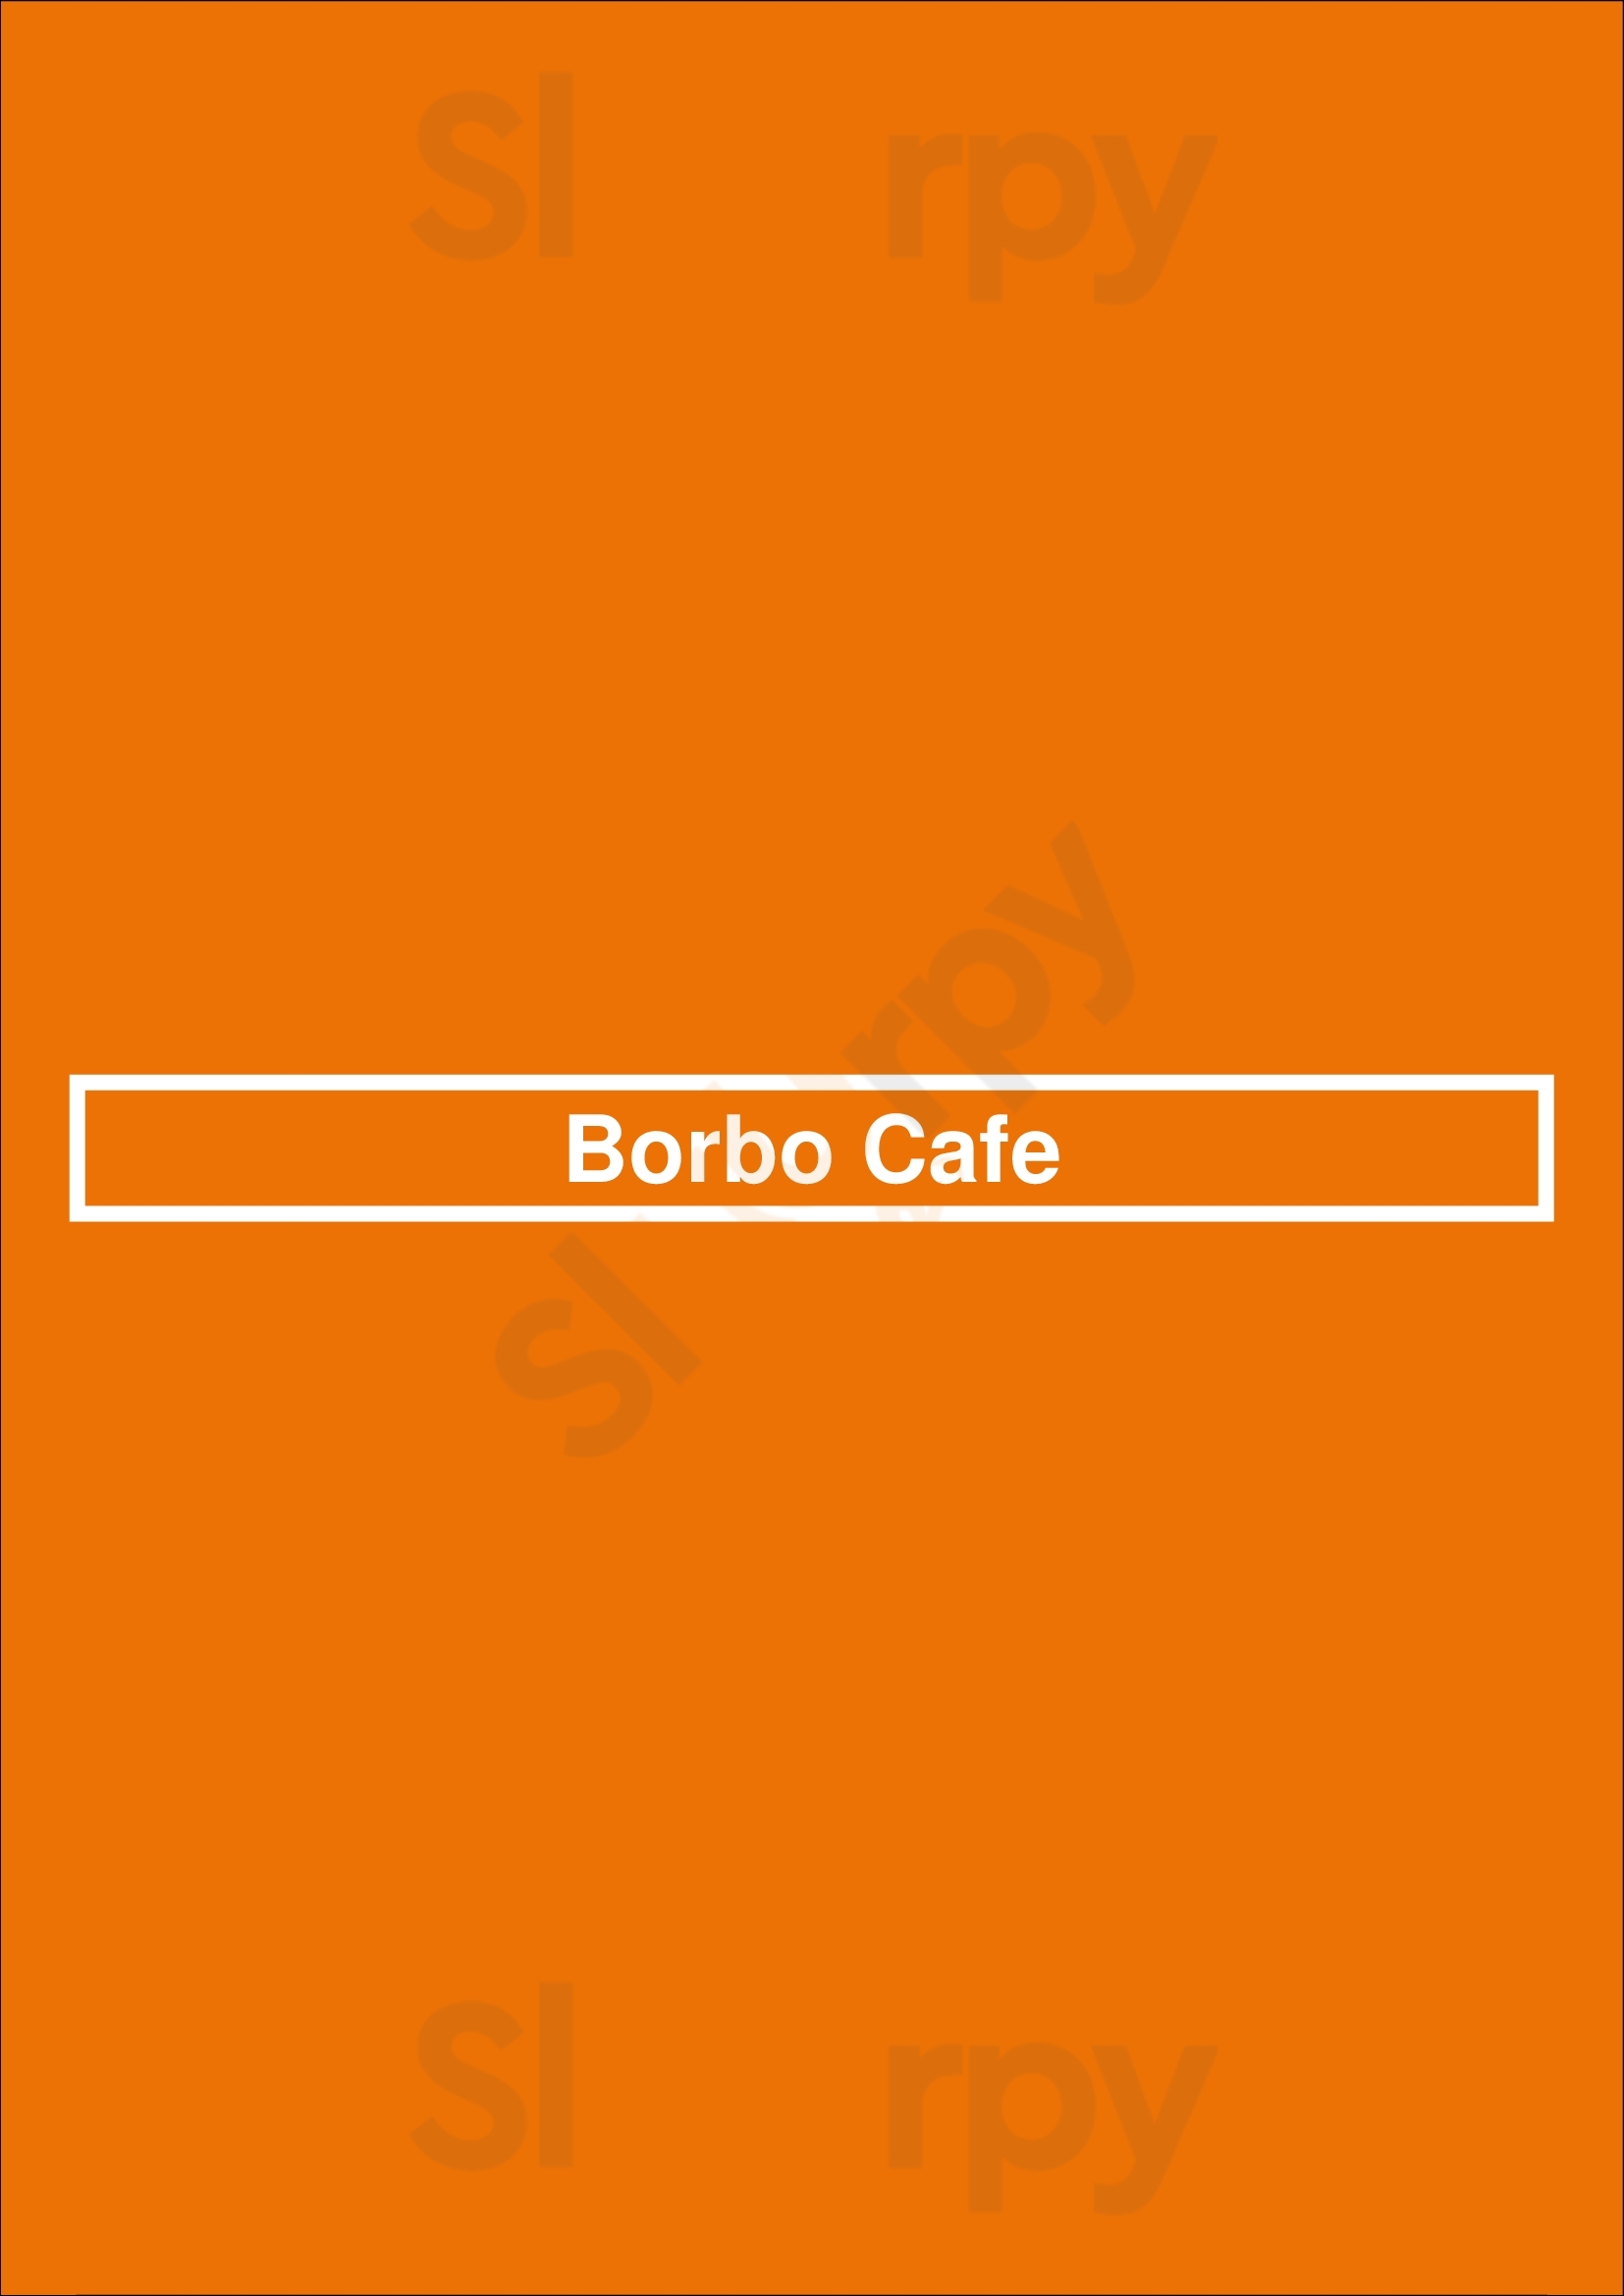 Borbo Cafe Barcelona Menu - 1